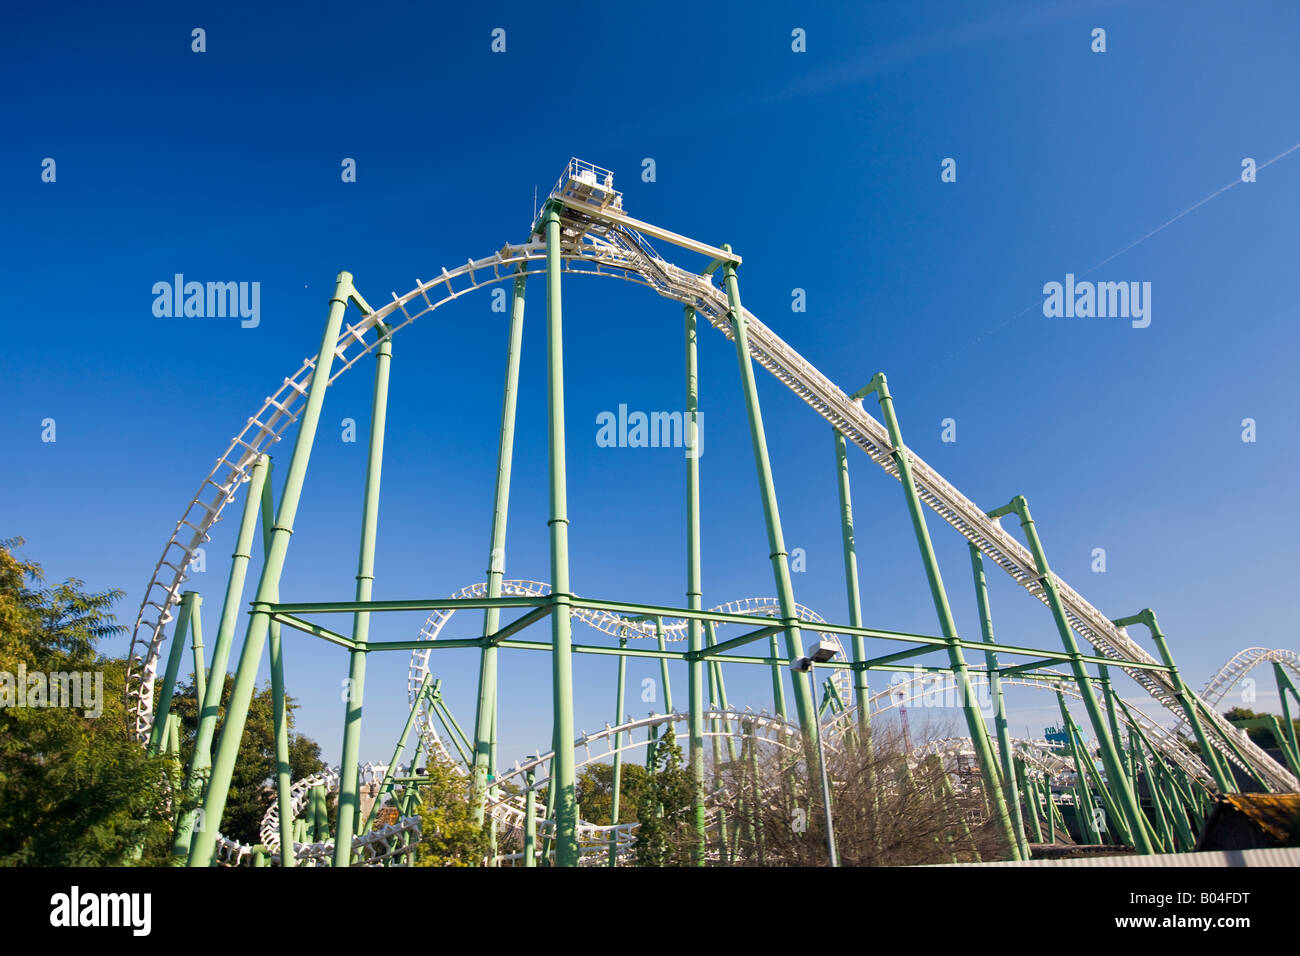 Roller coaster at the Isla Magica (Magic Island) theme park, Isle de la Cartuja, City of Sevilla (Seville), Province of Sevilla Stock Photo